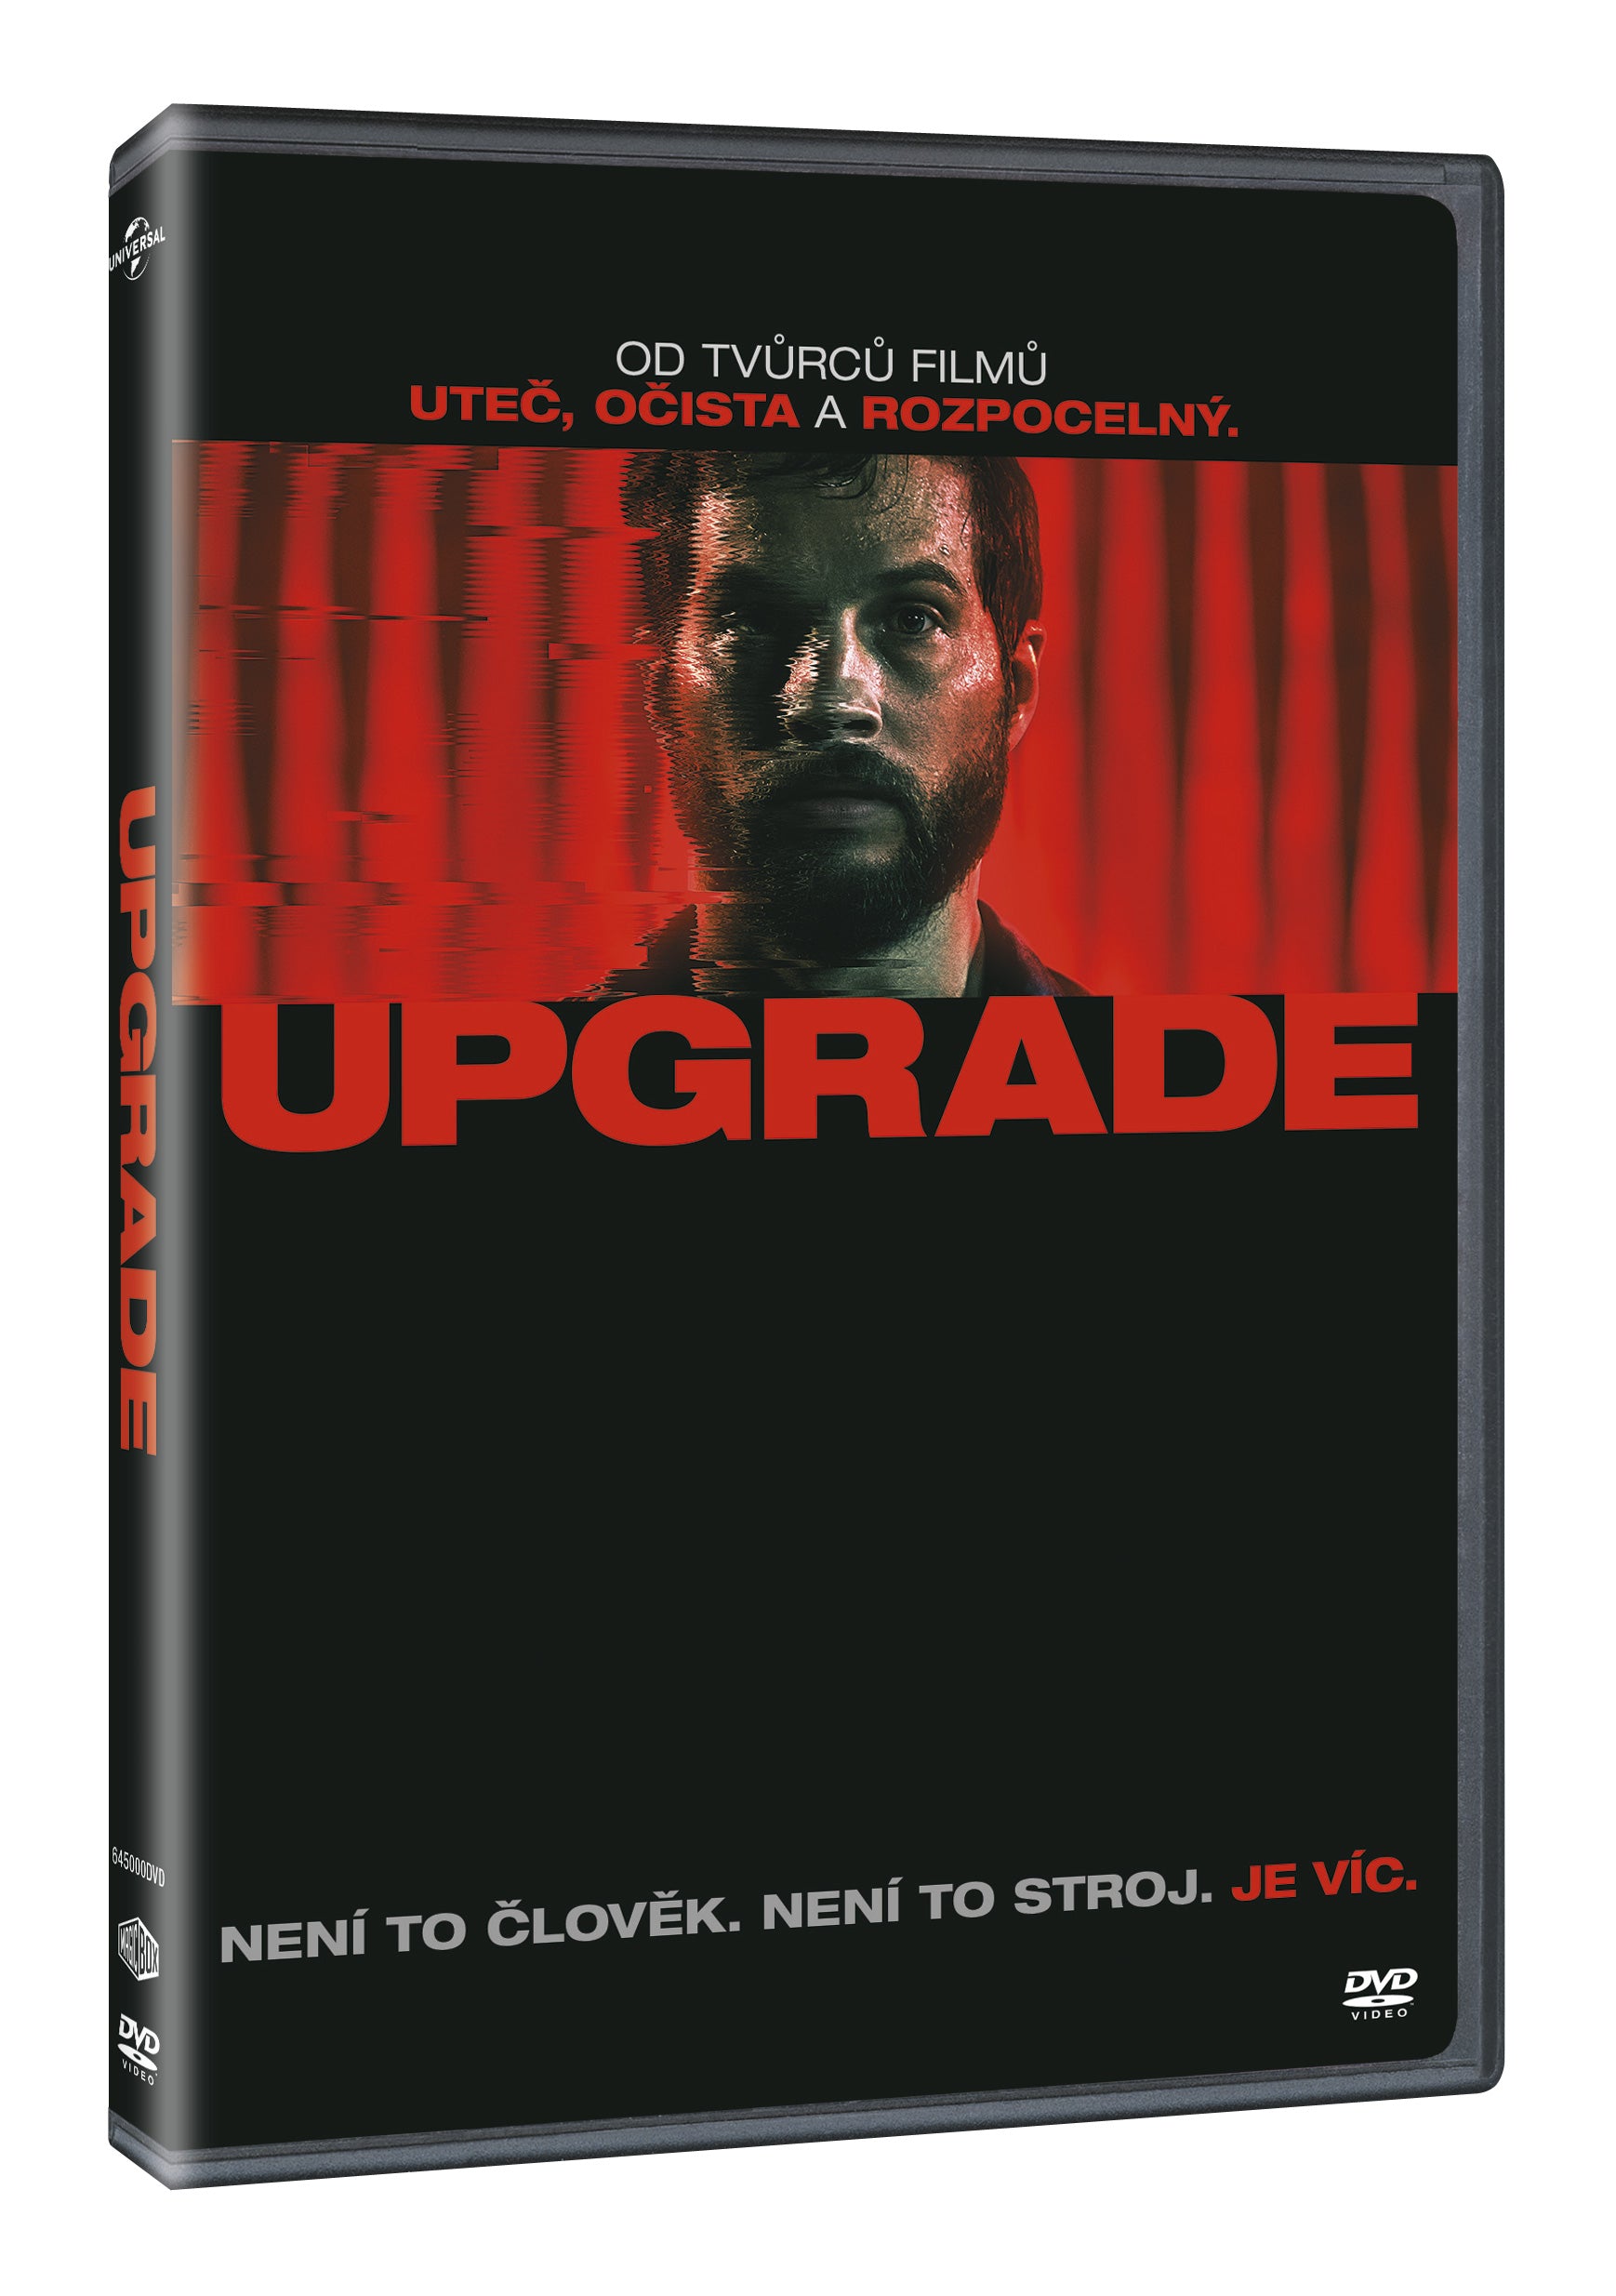 Upgrade DVD / Upgrade